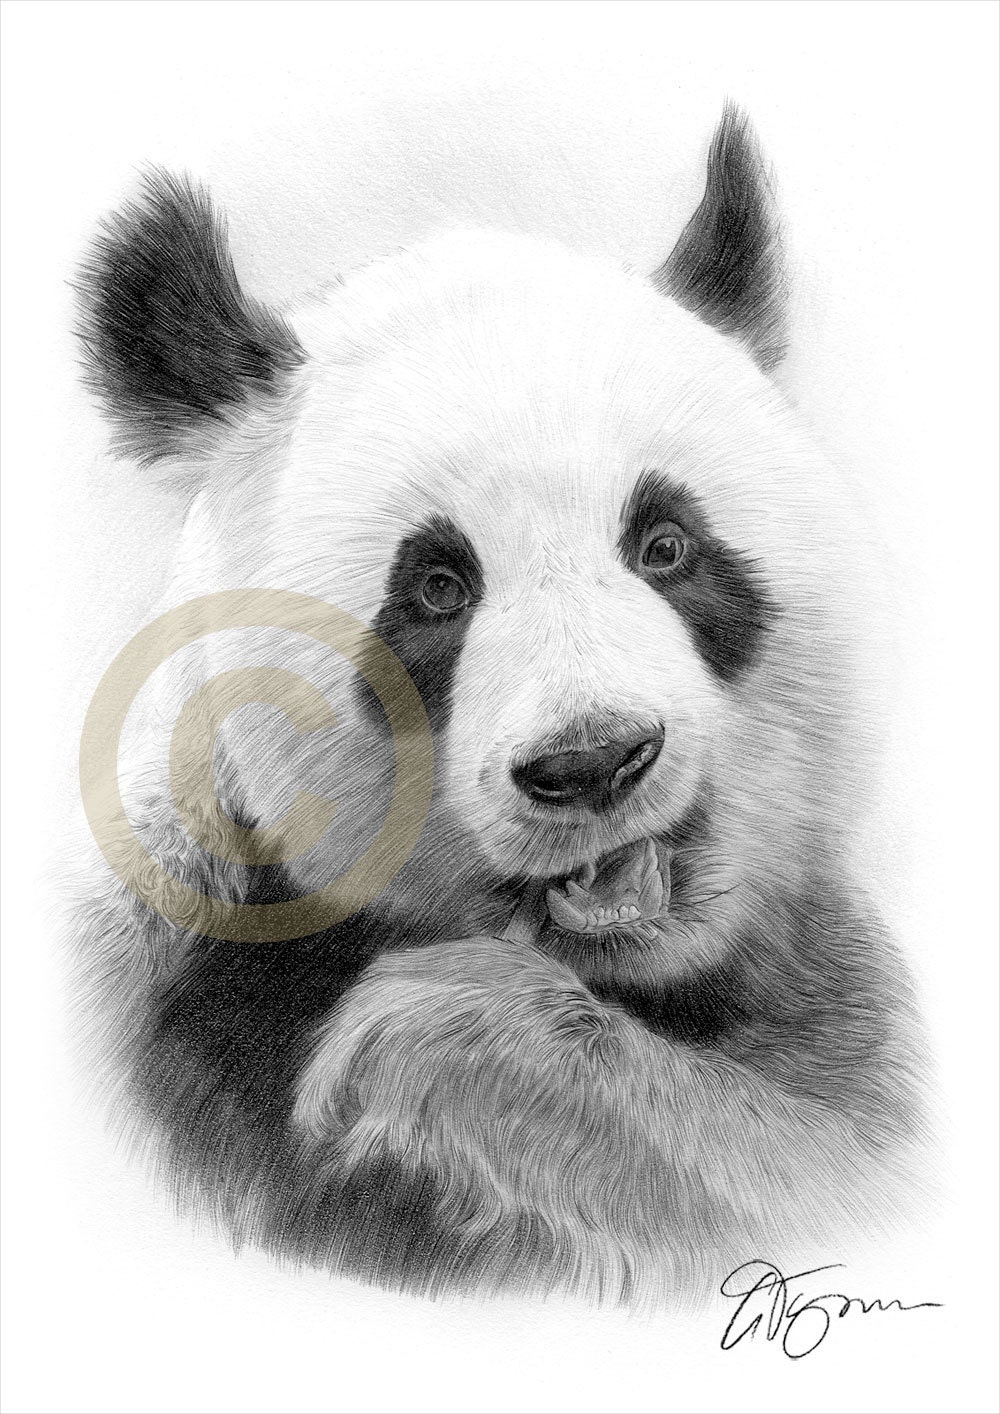 Giant Panda art pencil drawing print A4 size artwork